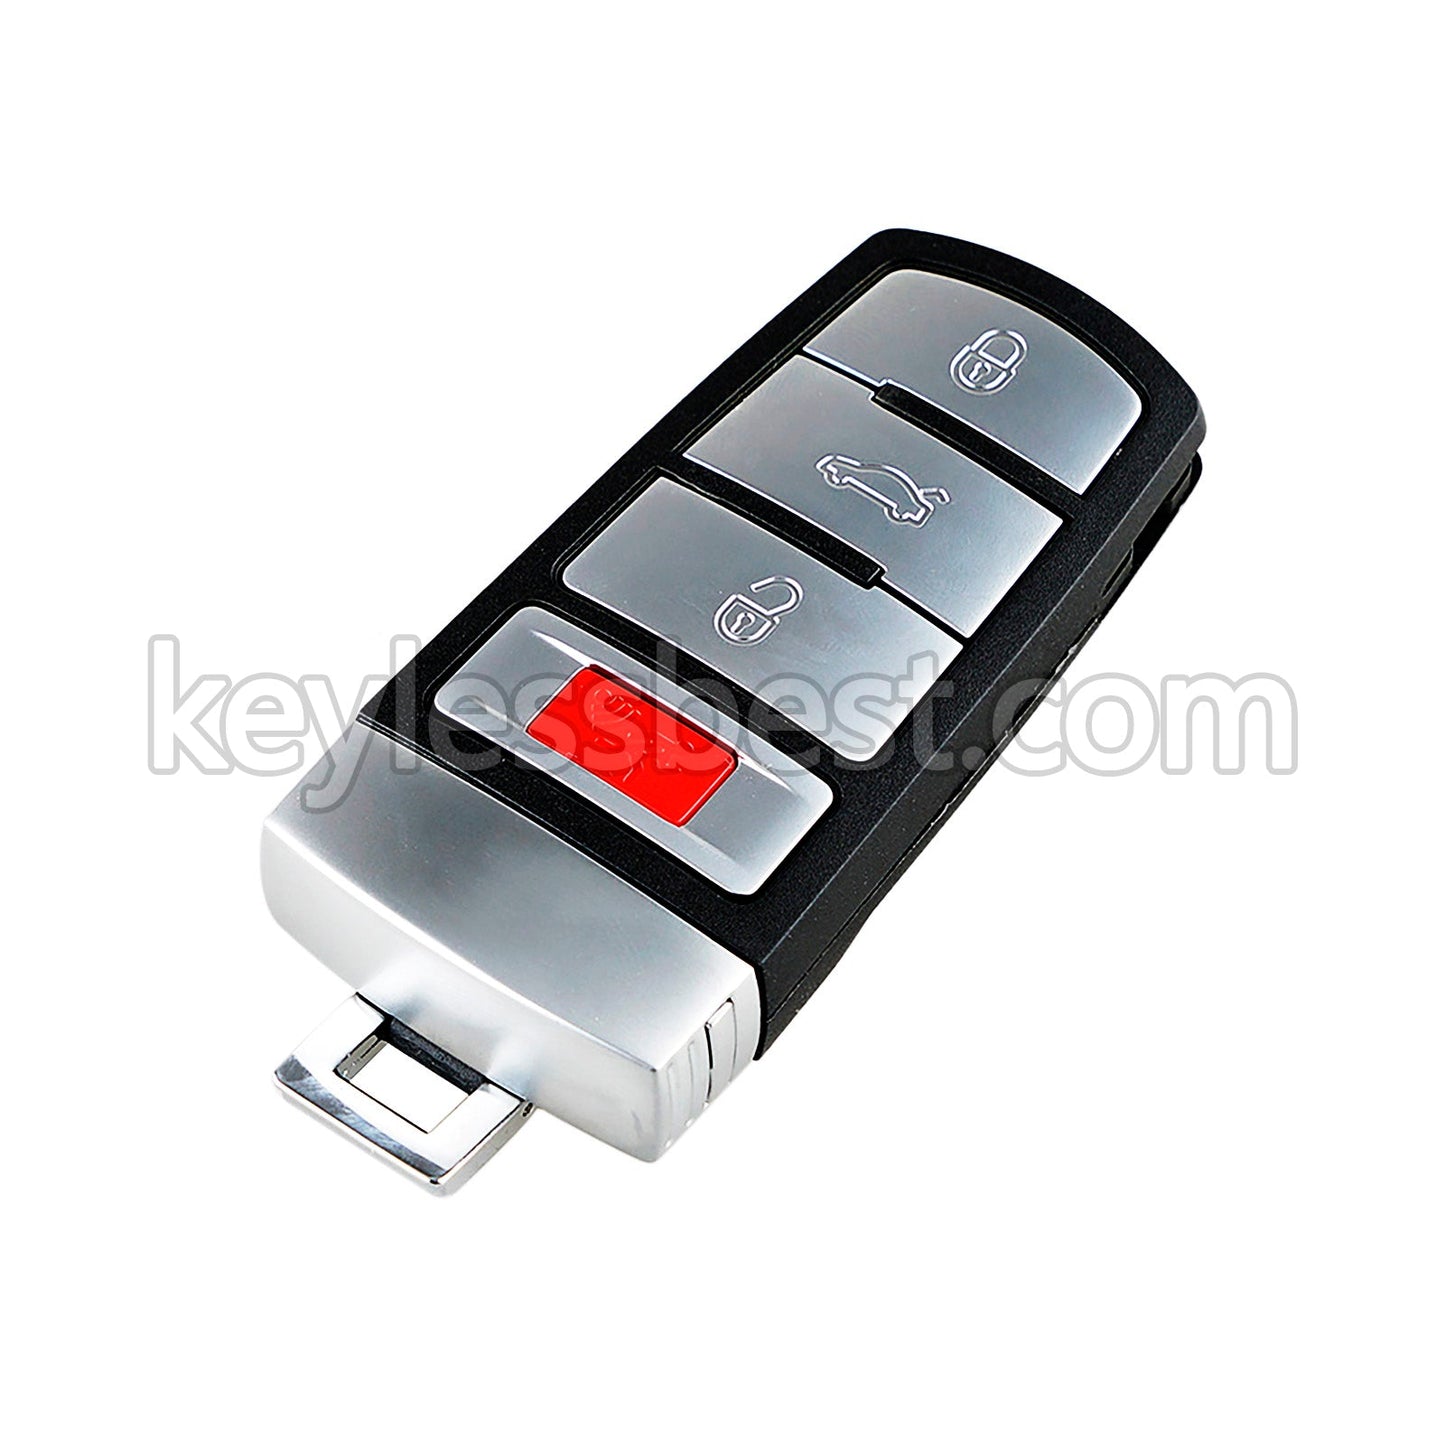 2006-2015 Volkswagen Passat Touareg CC / Smart Key Emergency Key / PN: HLO3C0959752N / Bundle of 10